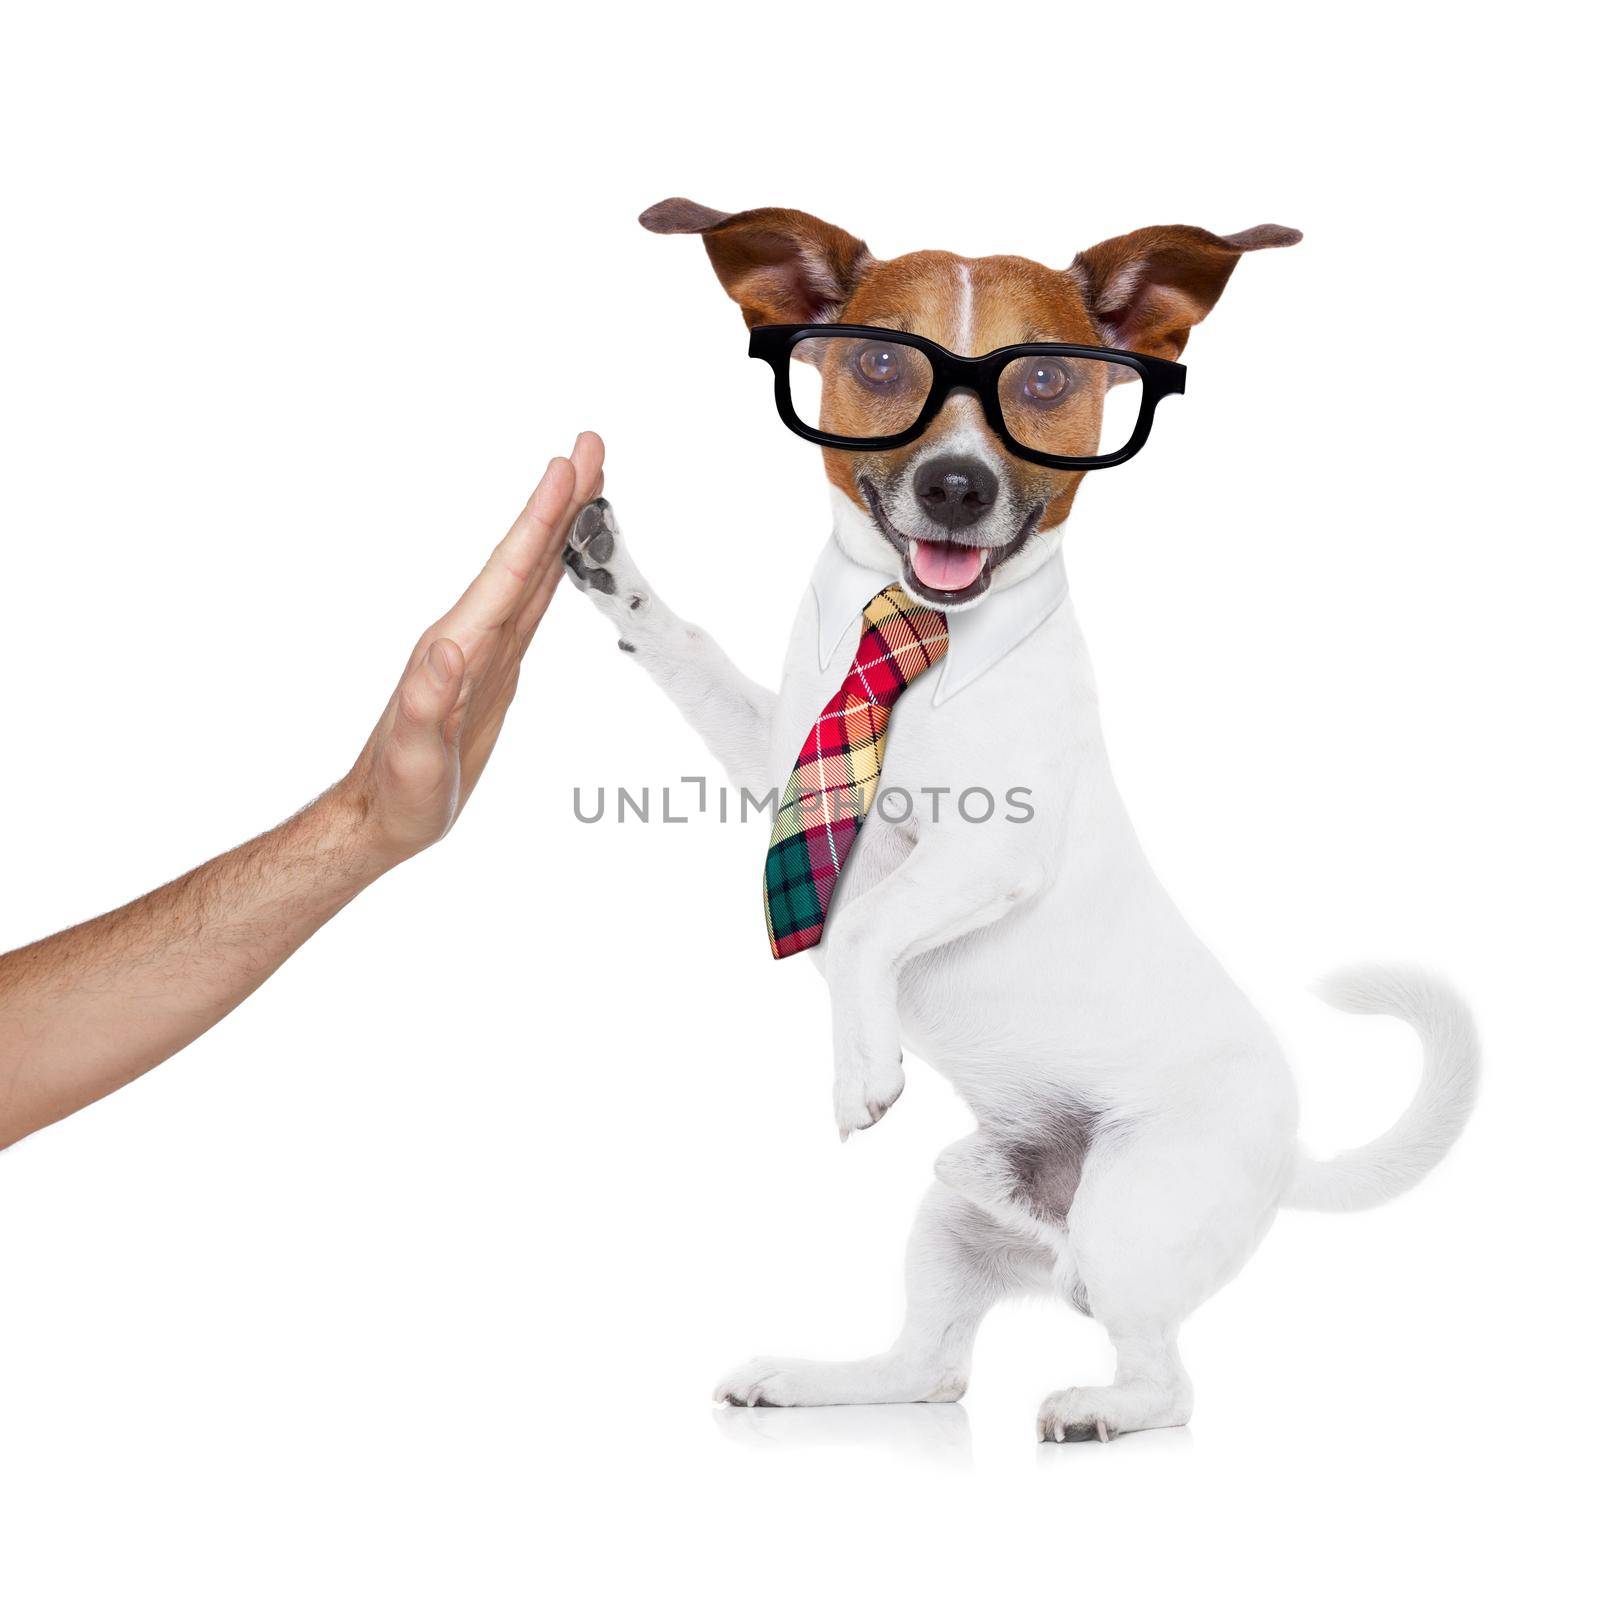 business dog high five by Brosch